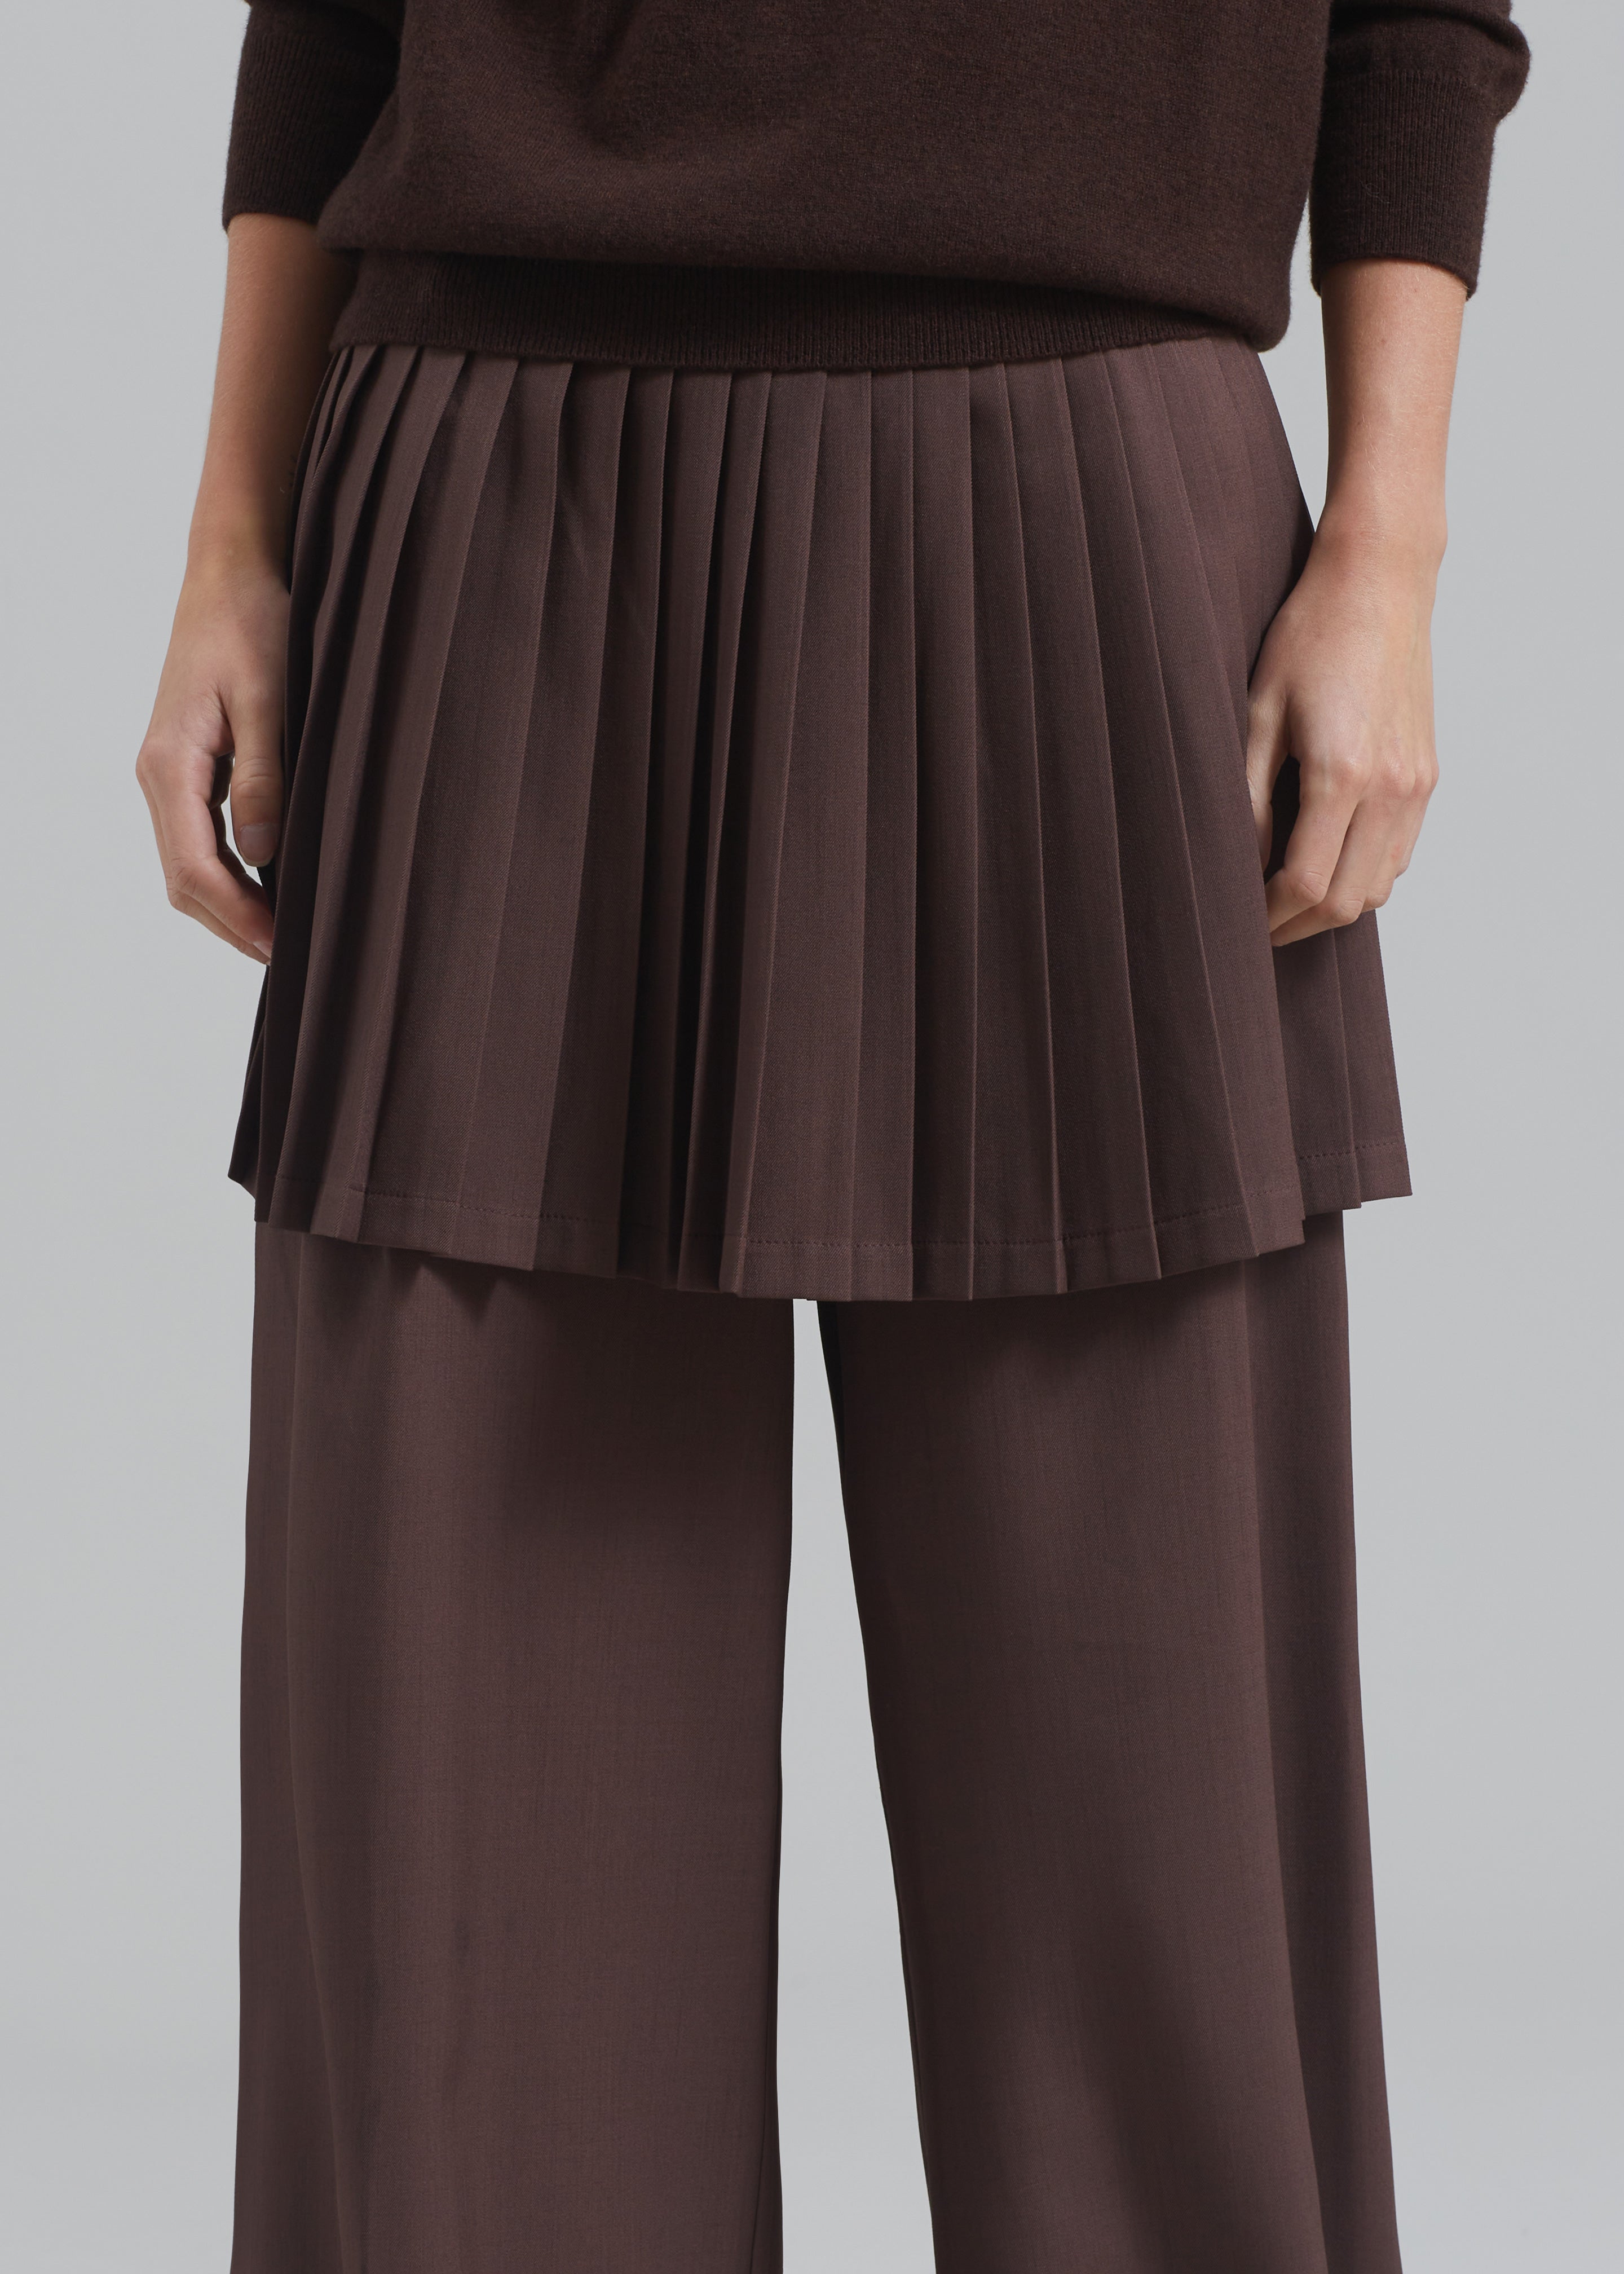 Lonnie Pleated Skirt Pants - Brown - 6